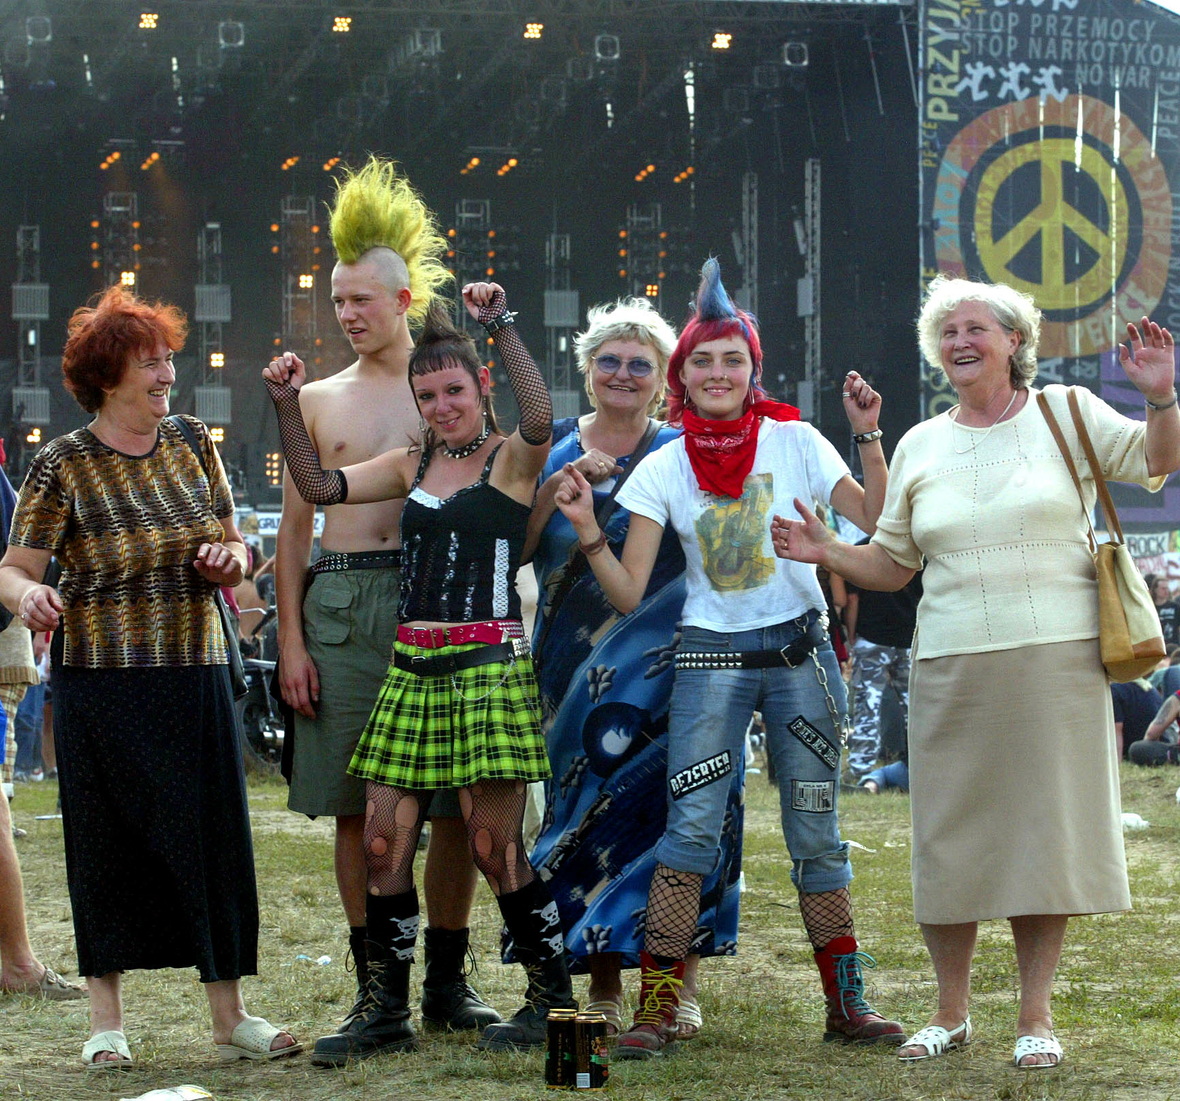 Open-Air-Festival "Haltestelle Woodstock" in der polnischen Grenzstadt Kostrzyn im Sommer 2005.